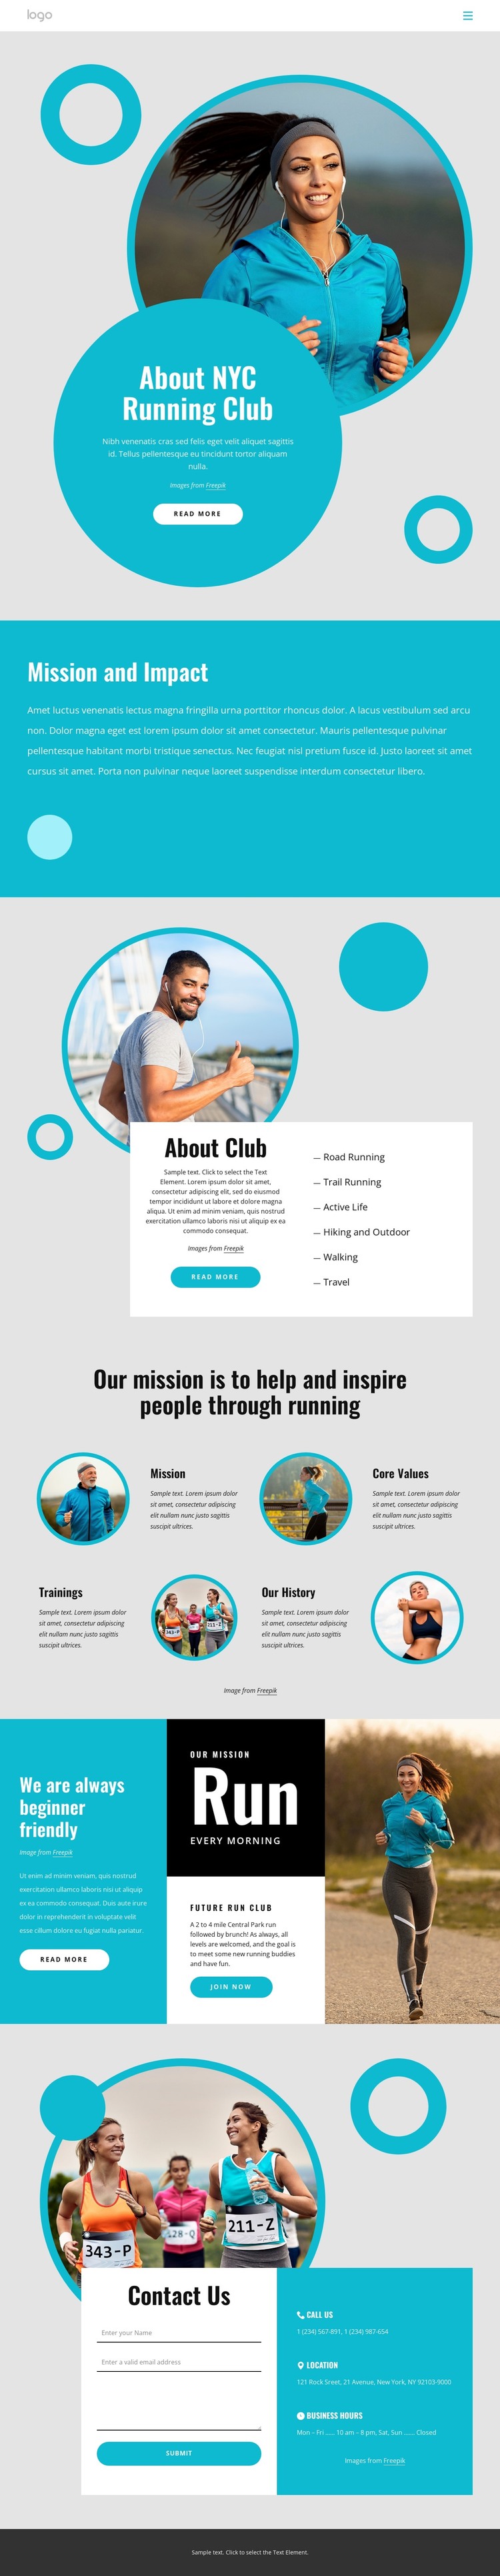 About NYC running club WordPress Theme